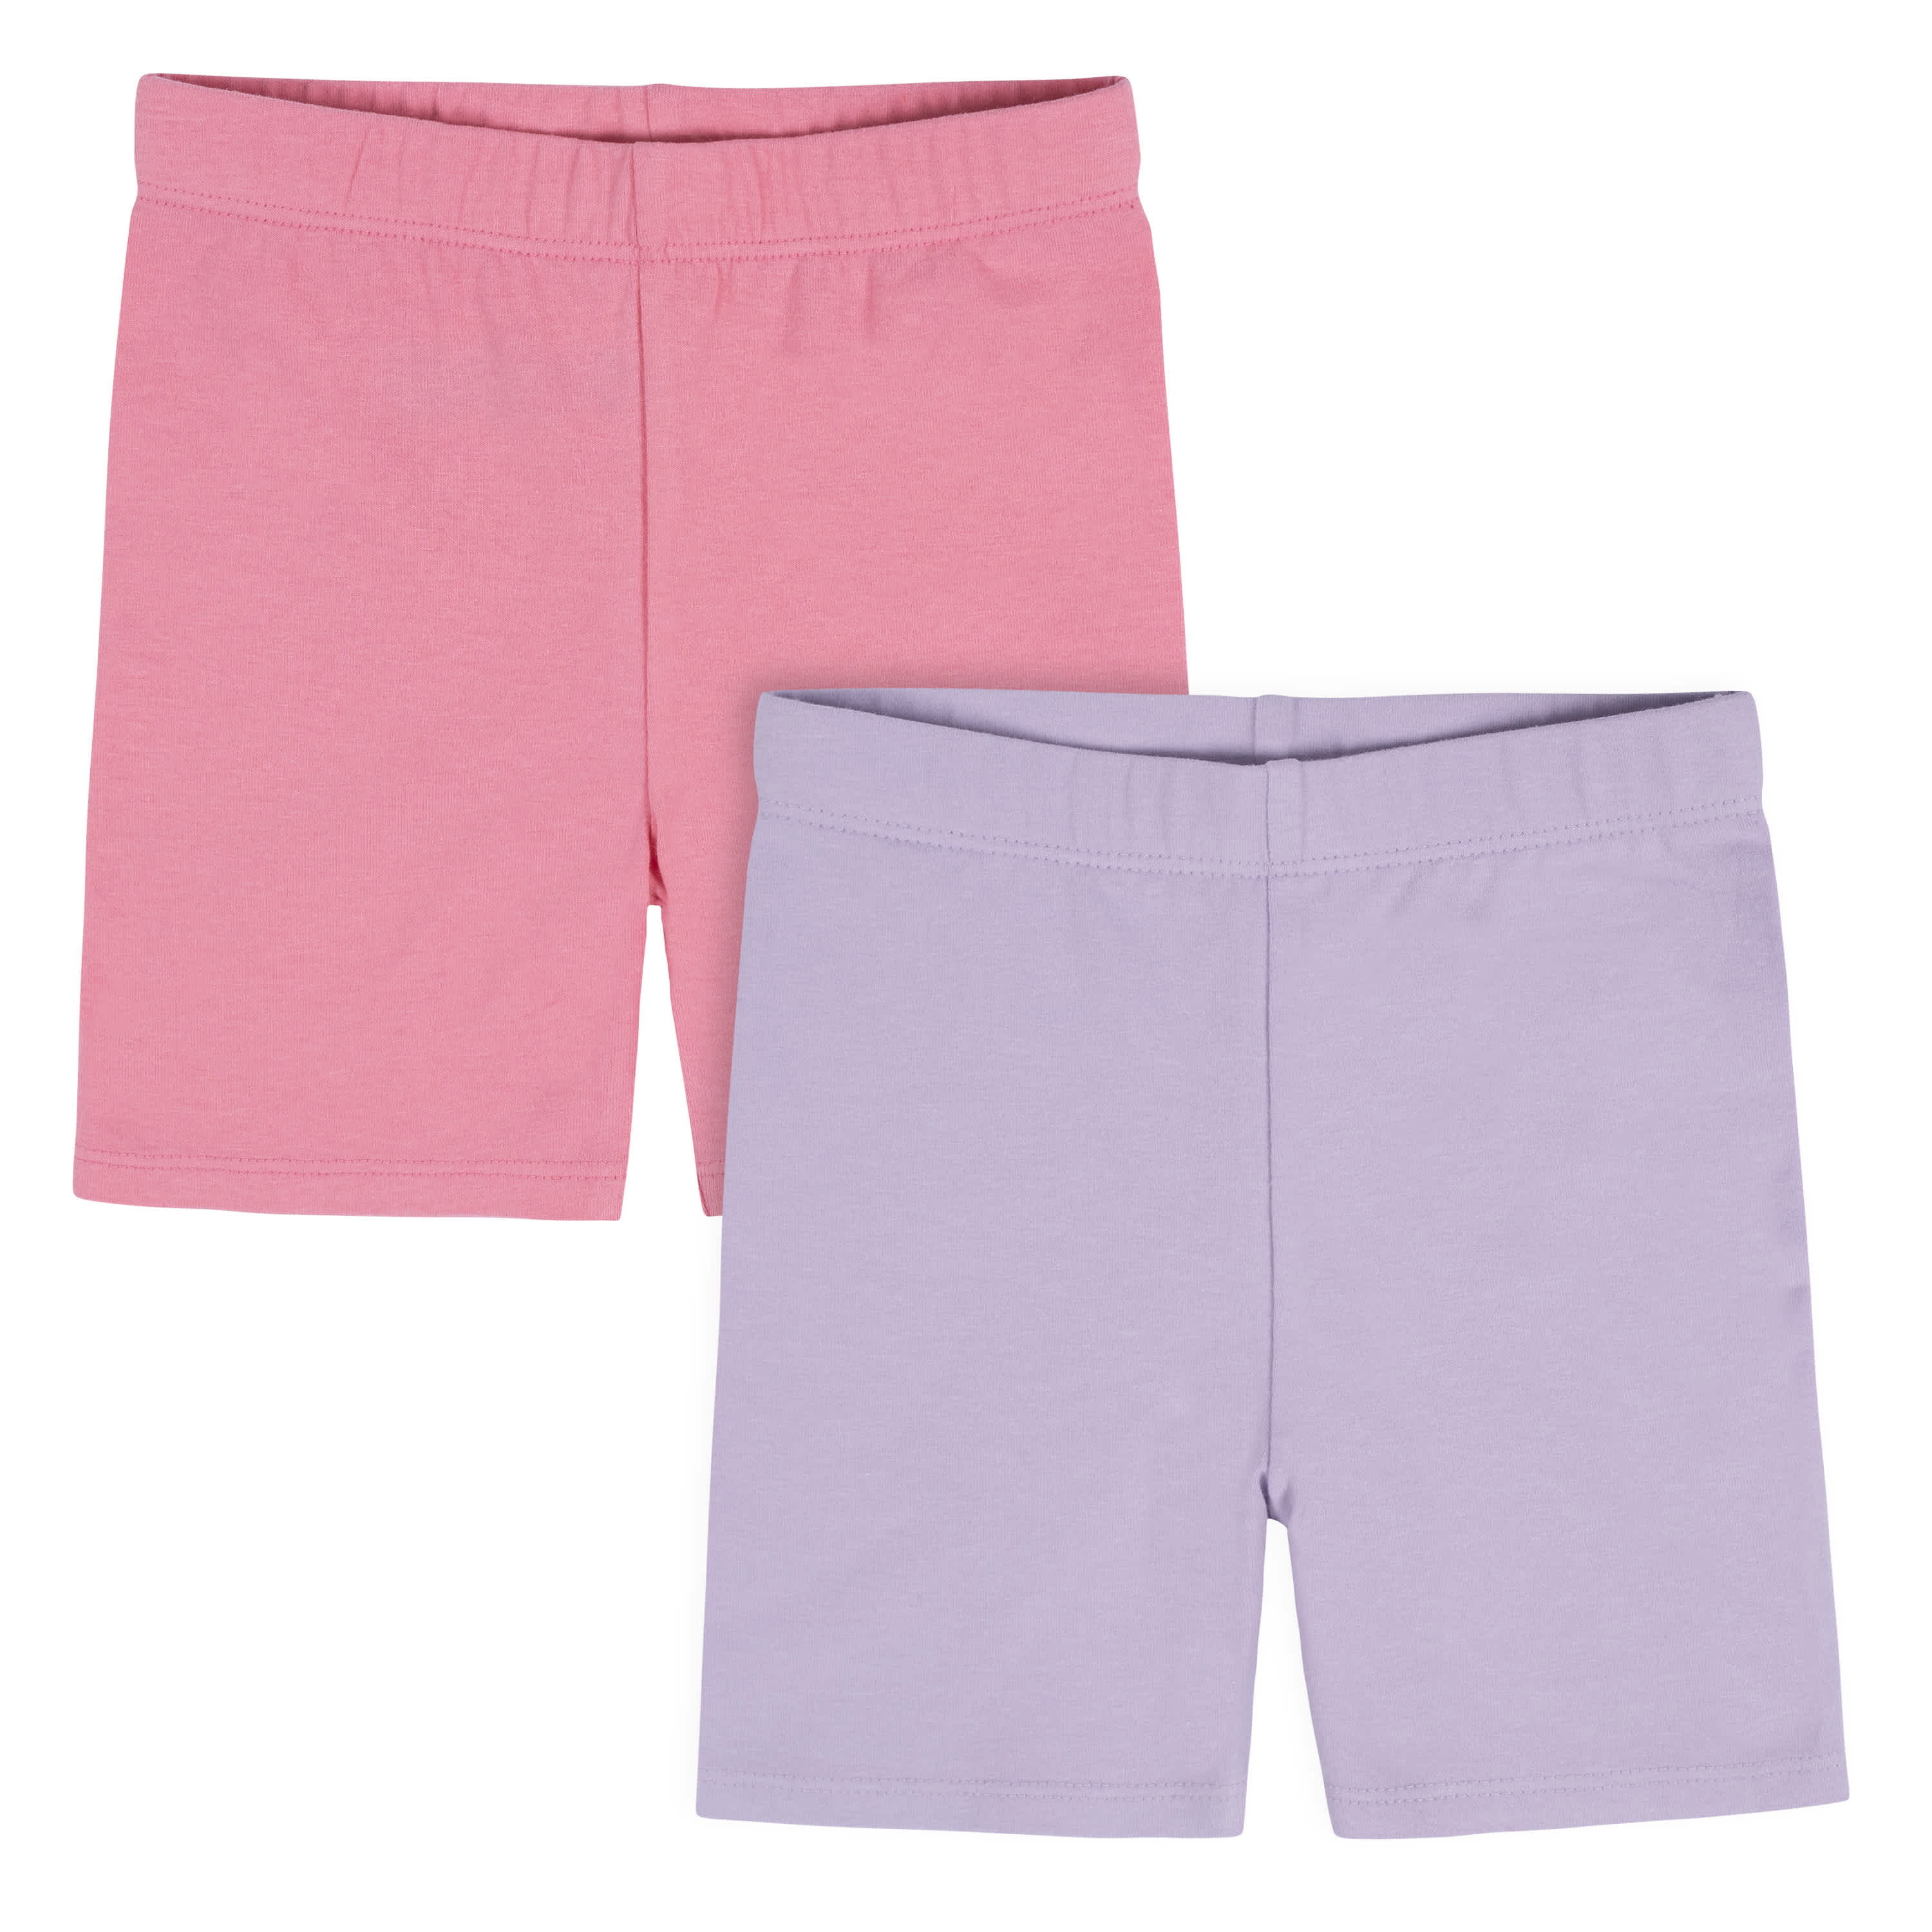 Girls Lavender, White, Pink 3 Pack Undershorts, Playground Athletic Bike  Shorts for Under Dresses